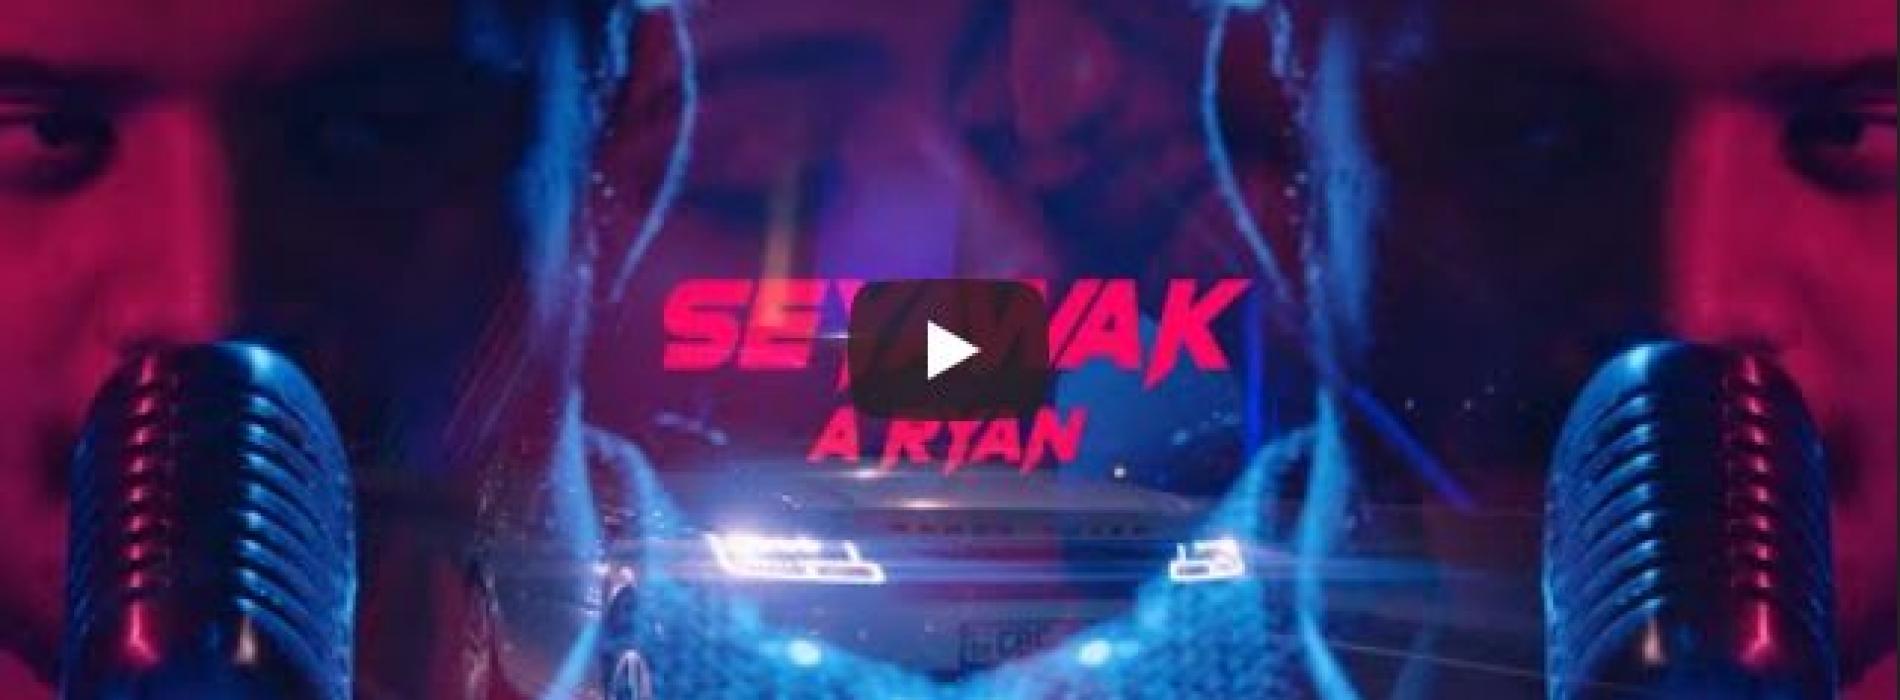 New Music : Seyawak (සේයාවක්) A Ryan ft Harshadewa Ariyasinghe